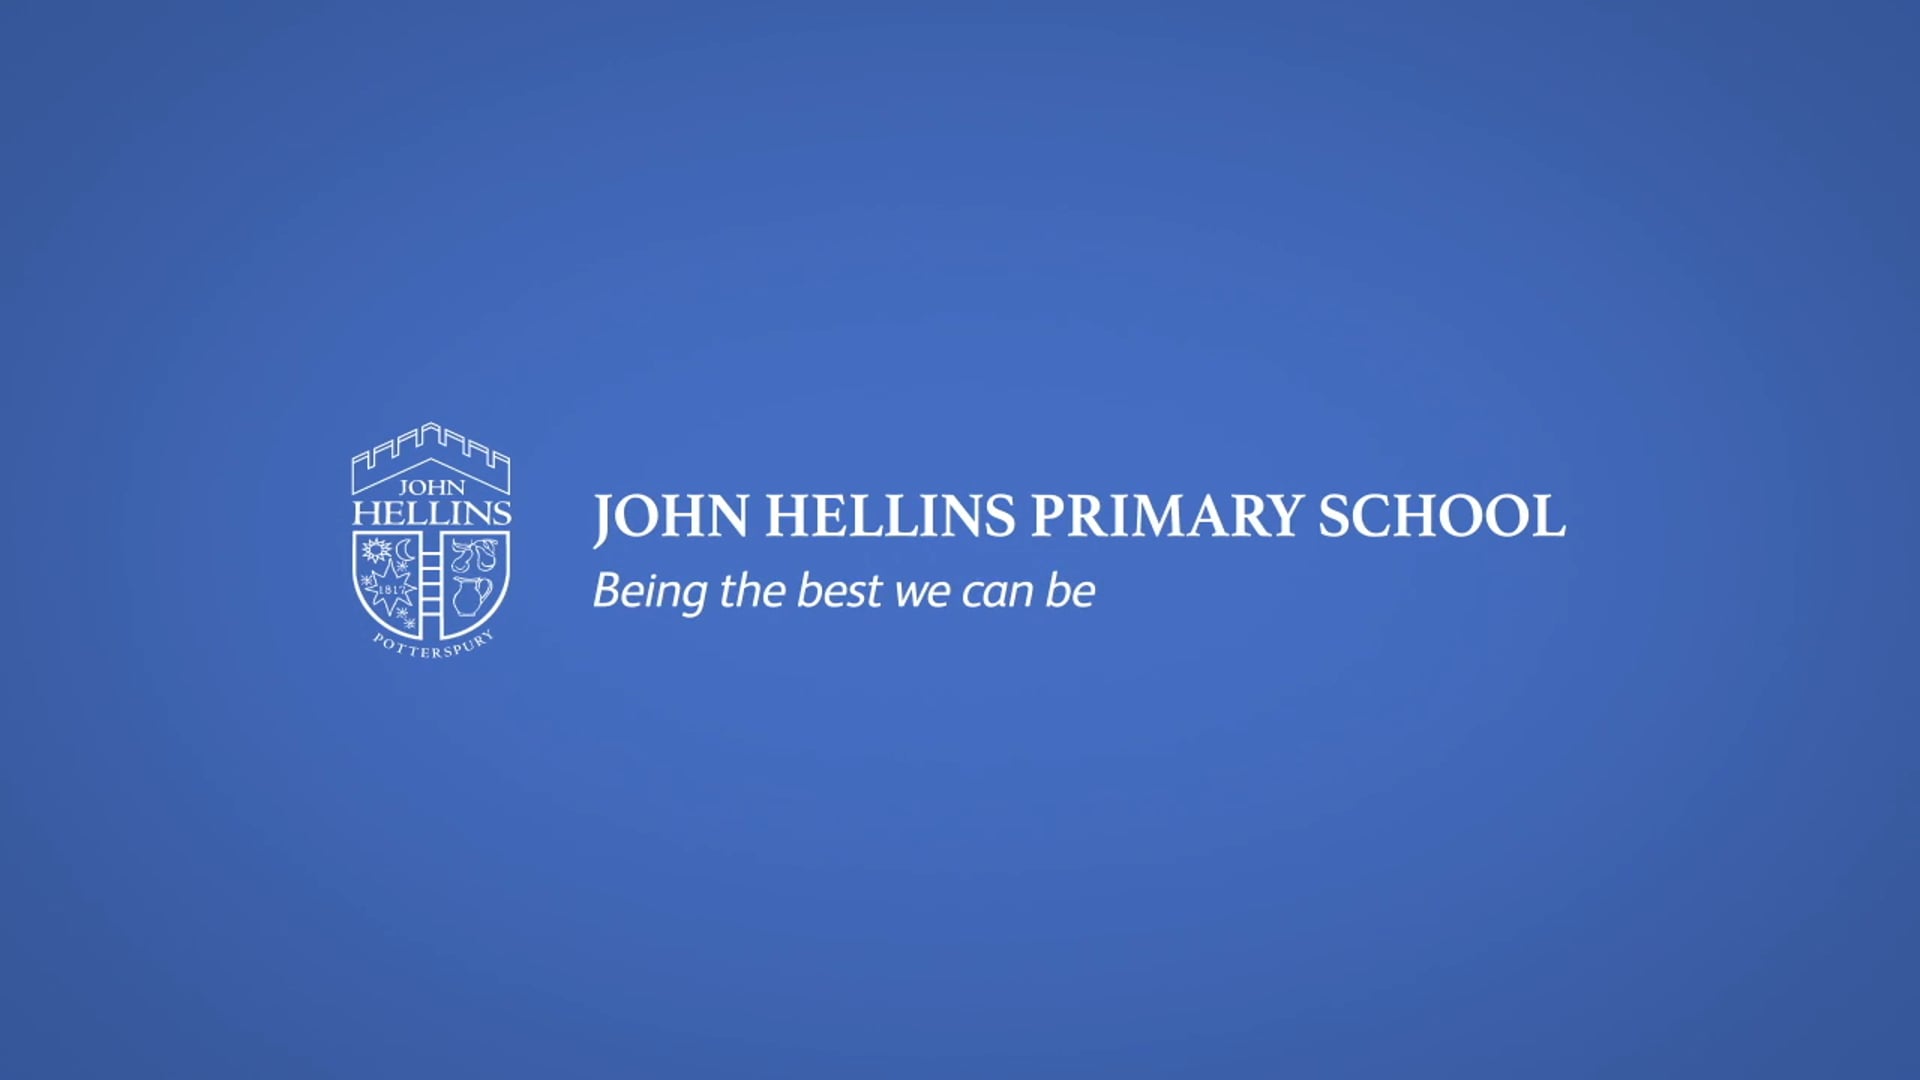 John Hellins - Staff Messages to Children April 2020